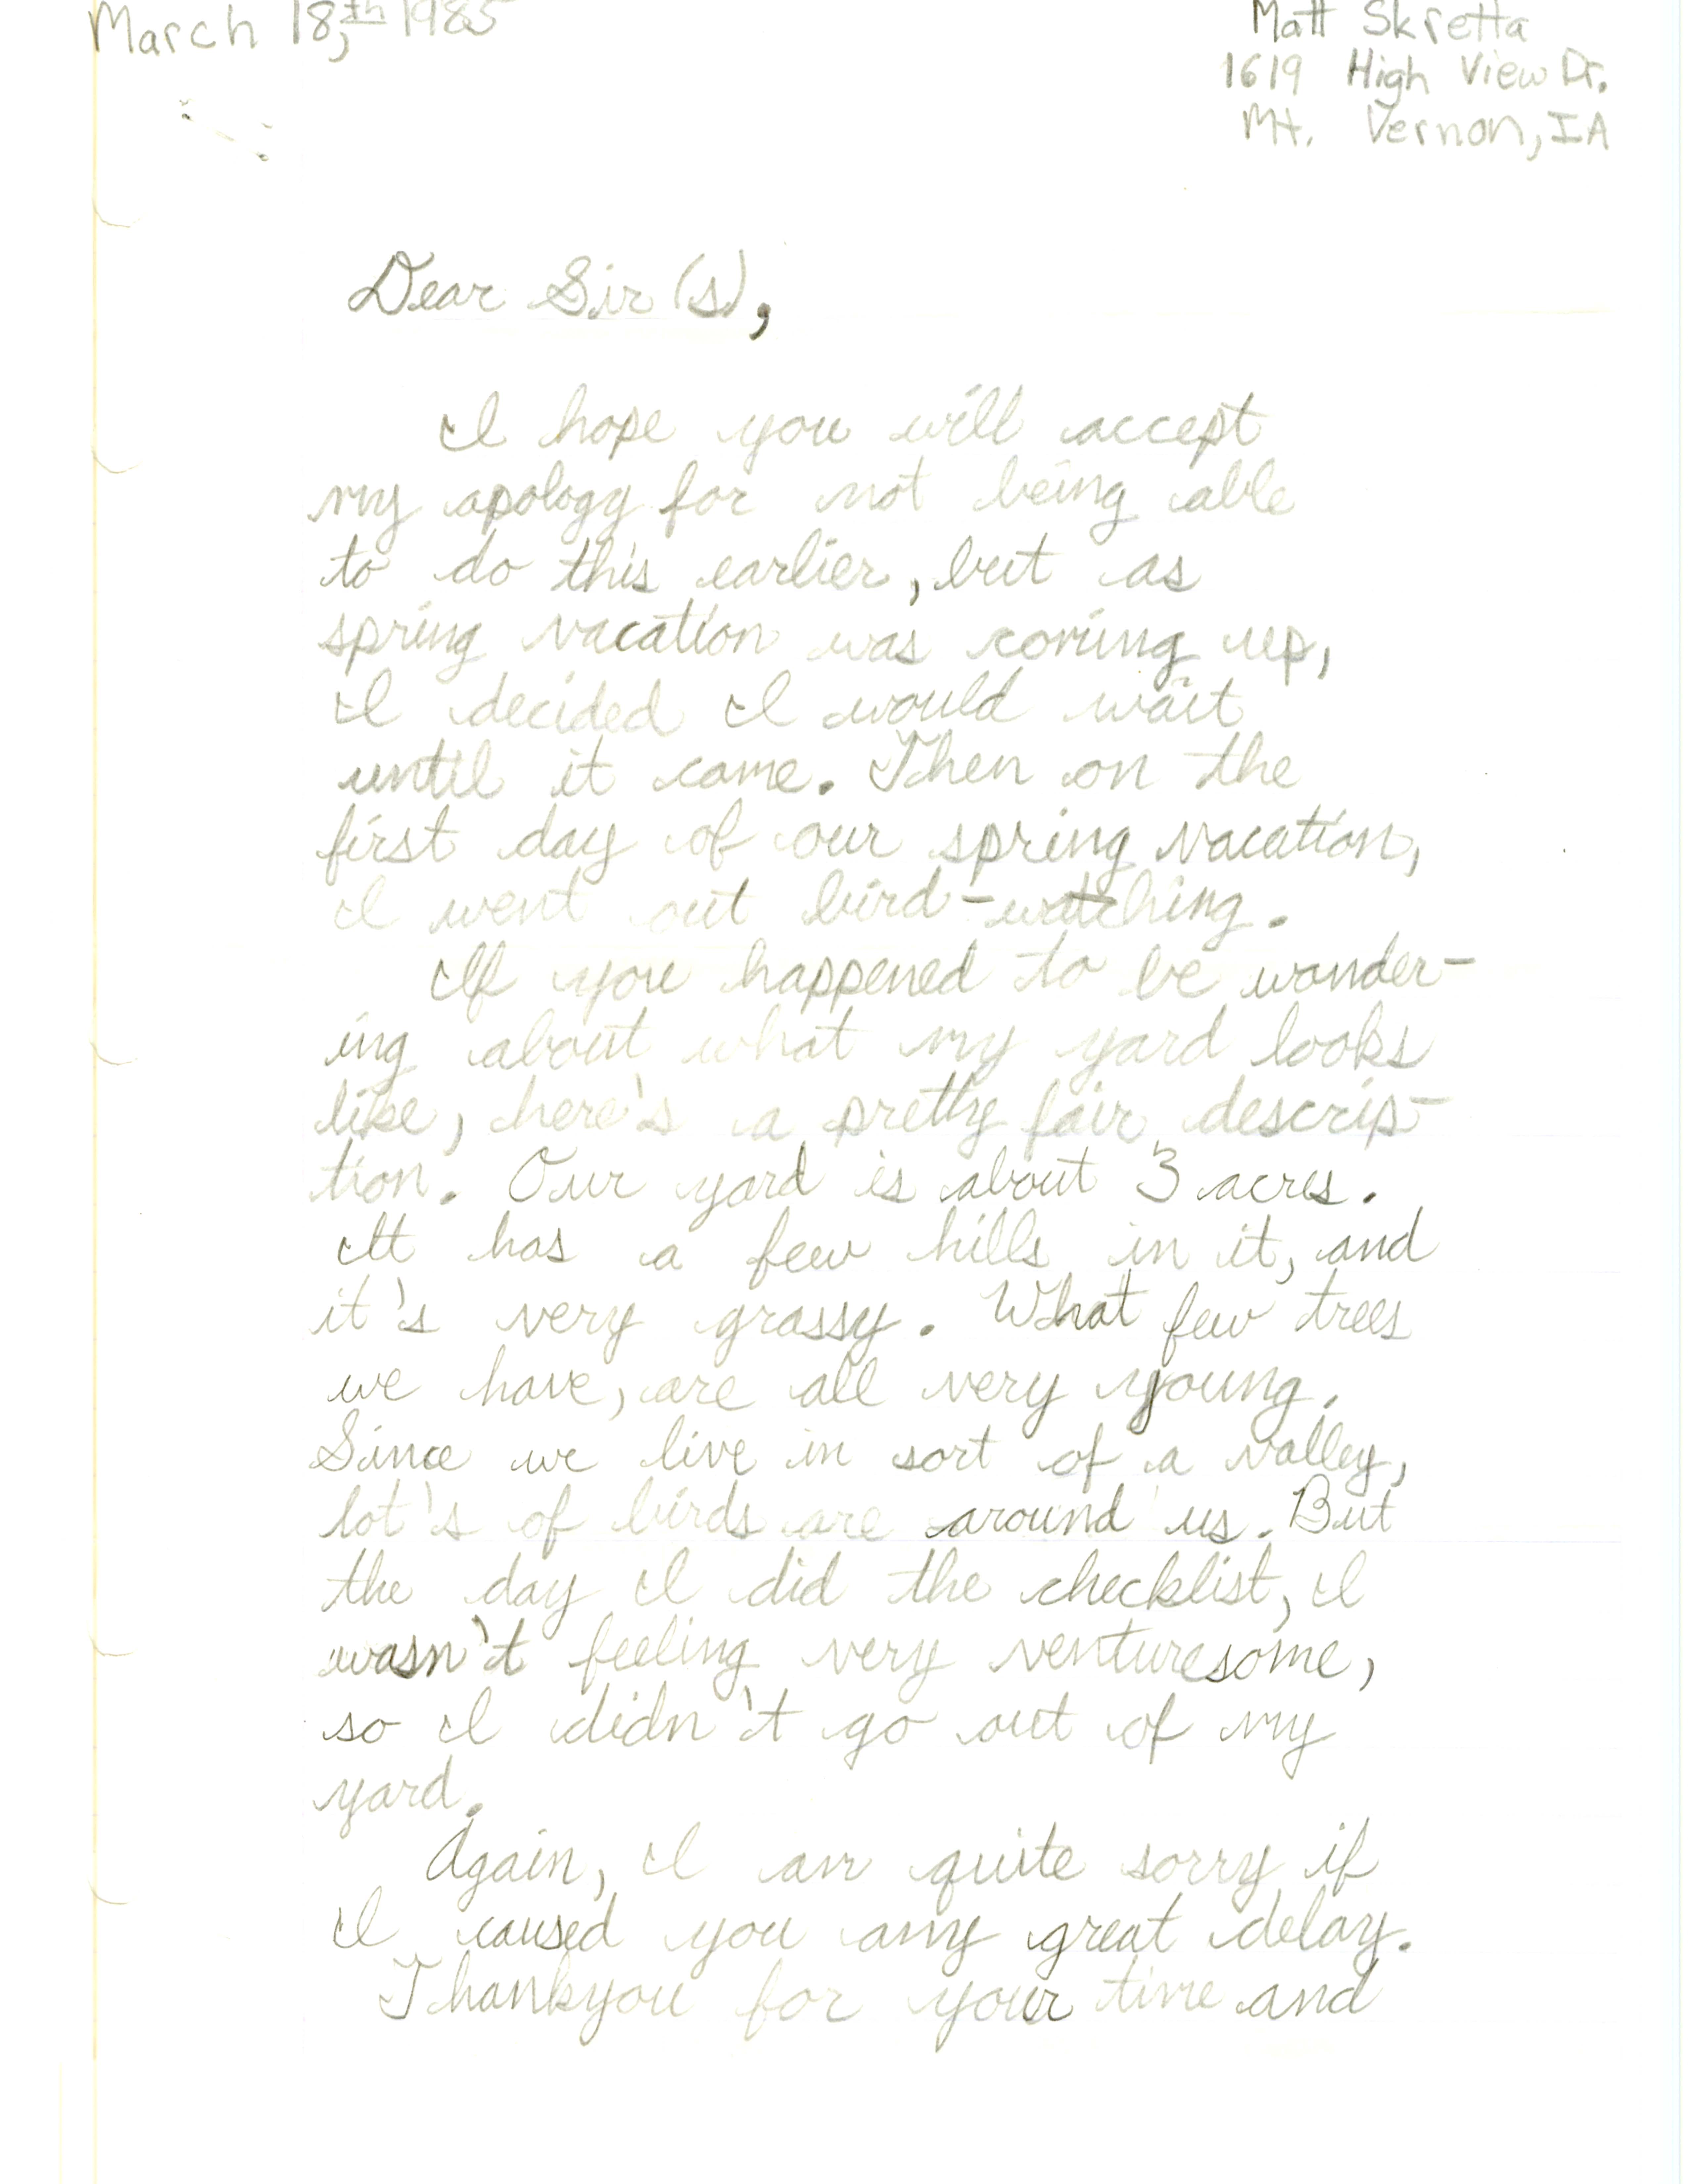 Matt Skretta letter to Iowa Ornitholgoists' Union regarding field notes, March 18, 1985